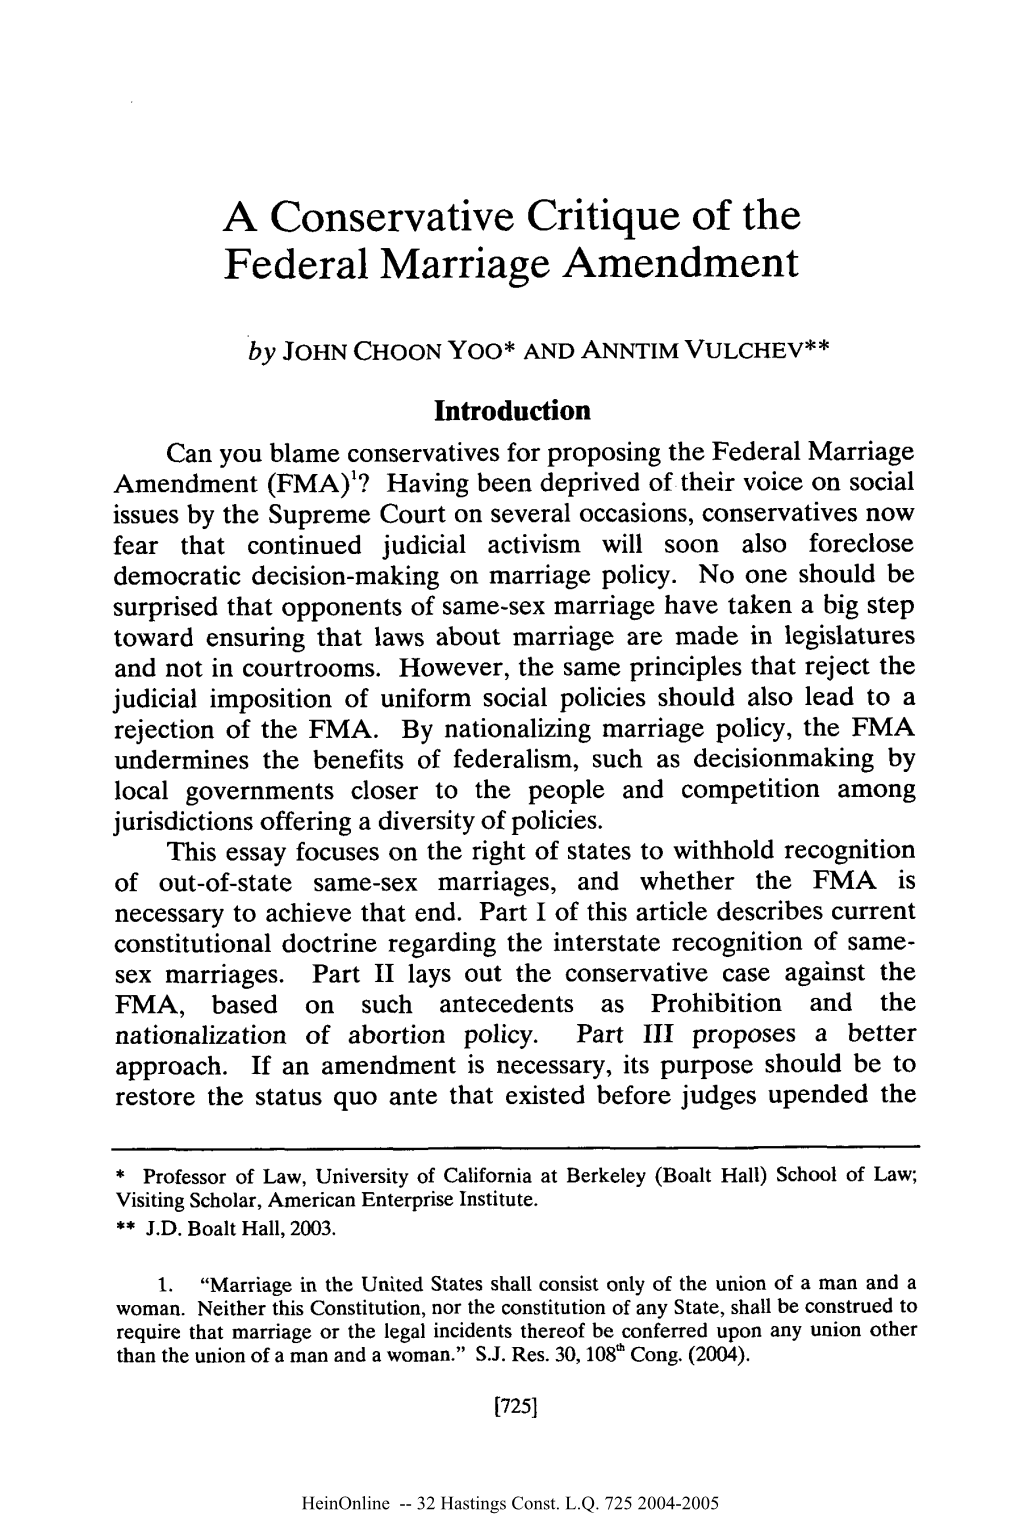 A Conservative Critique of the Federal Marriage Amendment